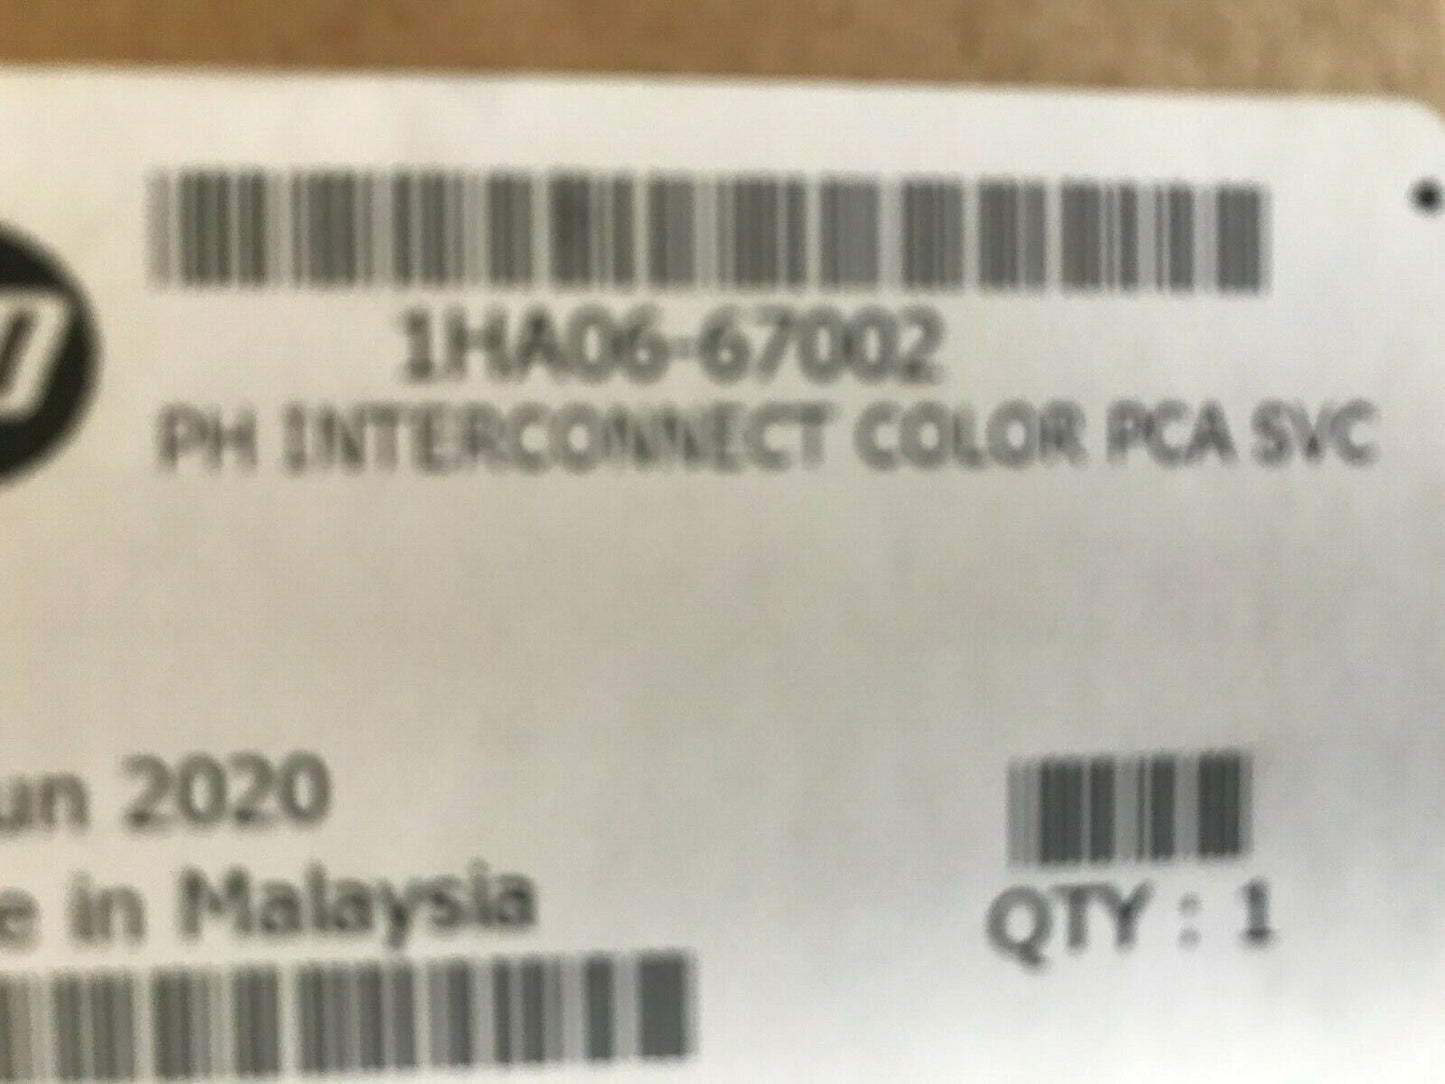 NEW HP 1HA06-67002 PH Interconnect color PCA SVC LATEX 3000 3100 3200 3500 3600